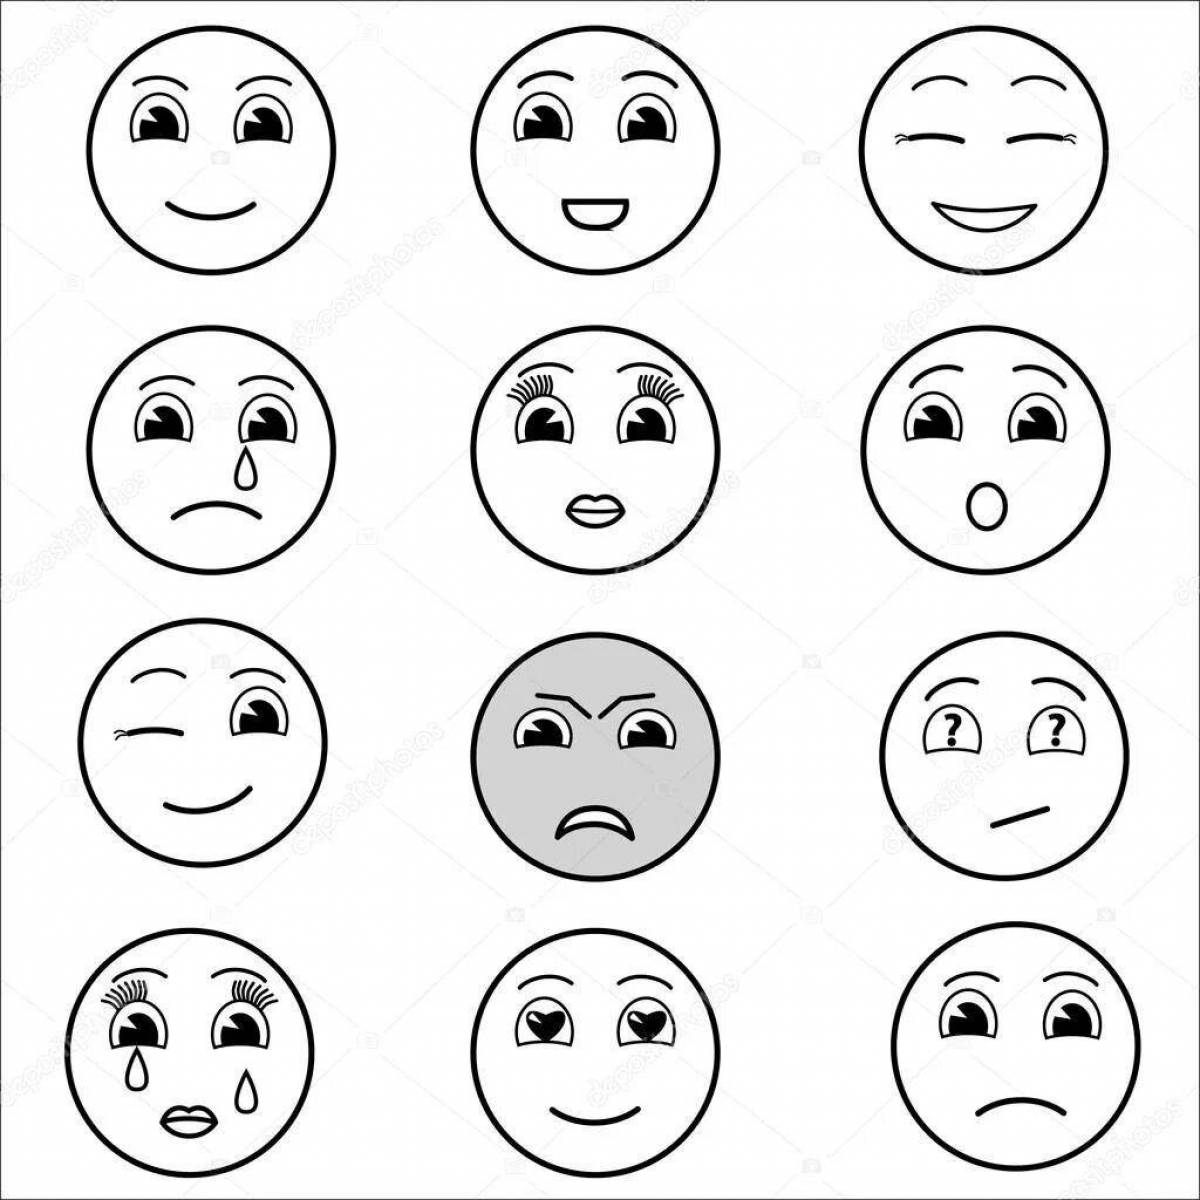 Mood emoticons #1